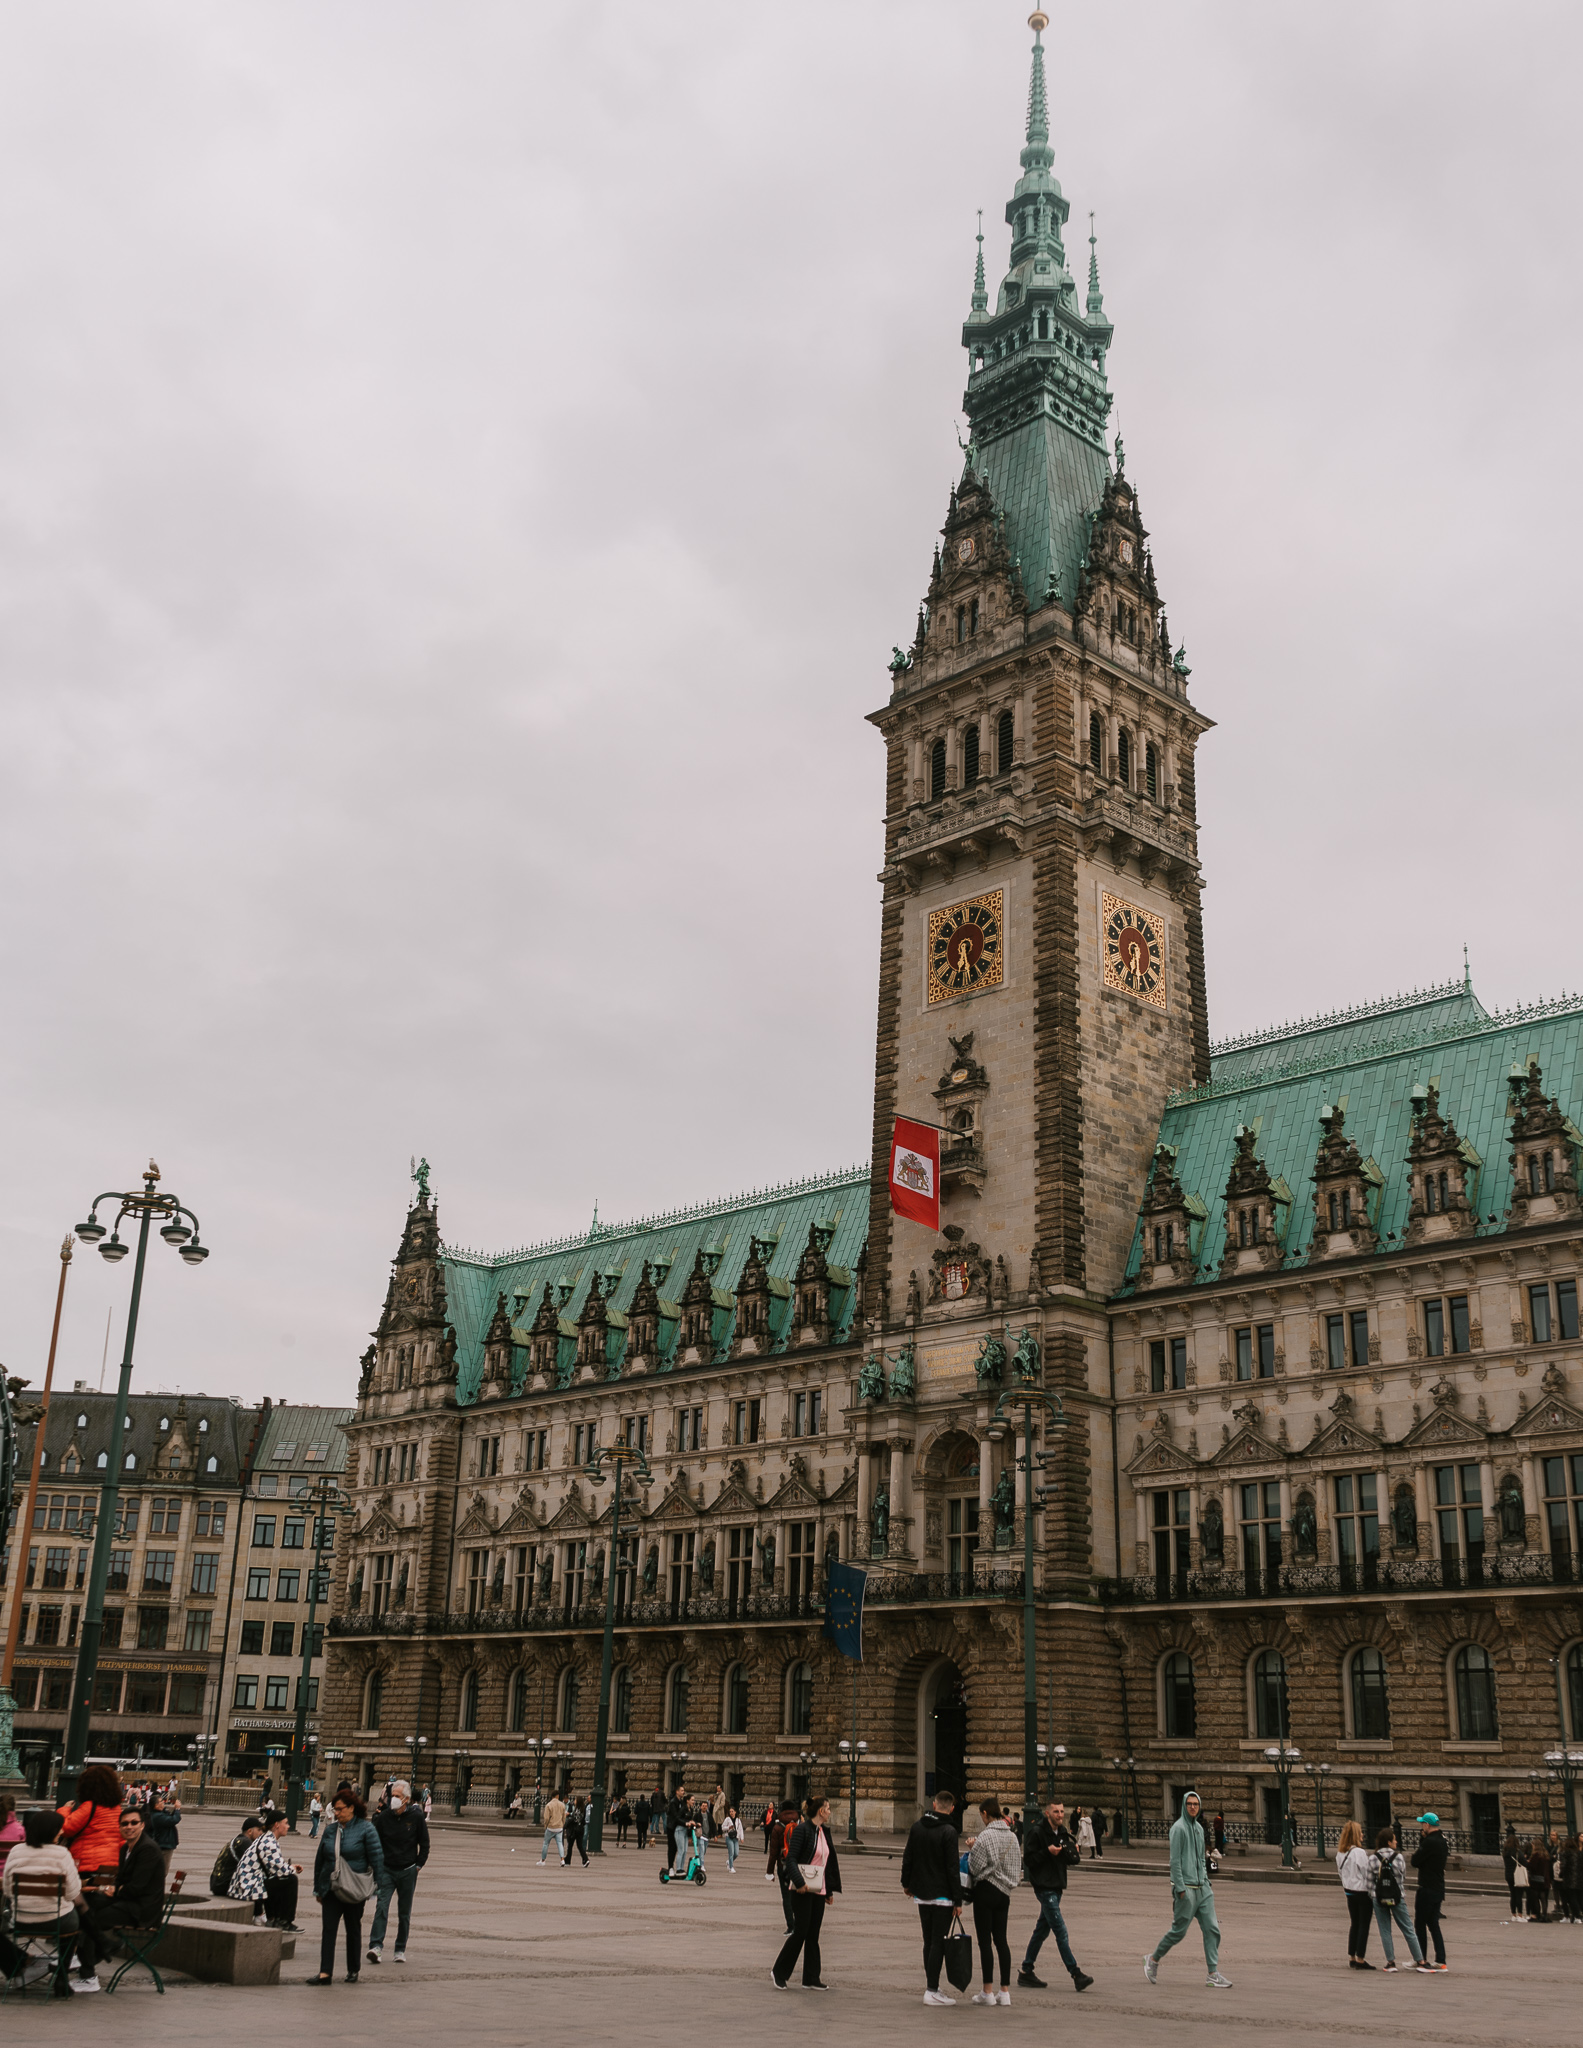 The rathaus of Hamburg Germany